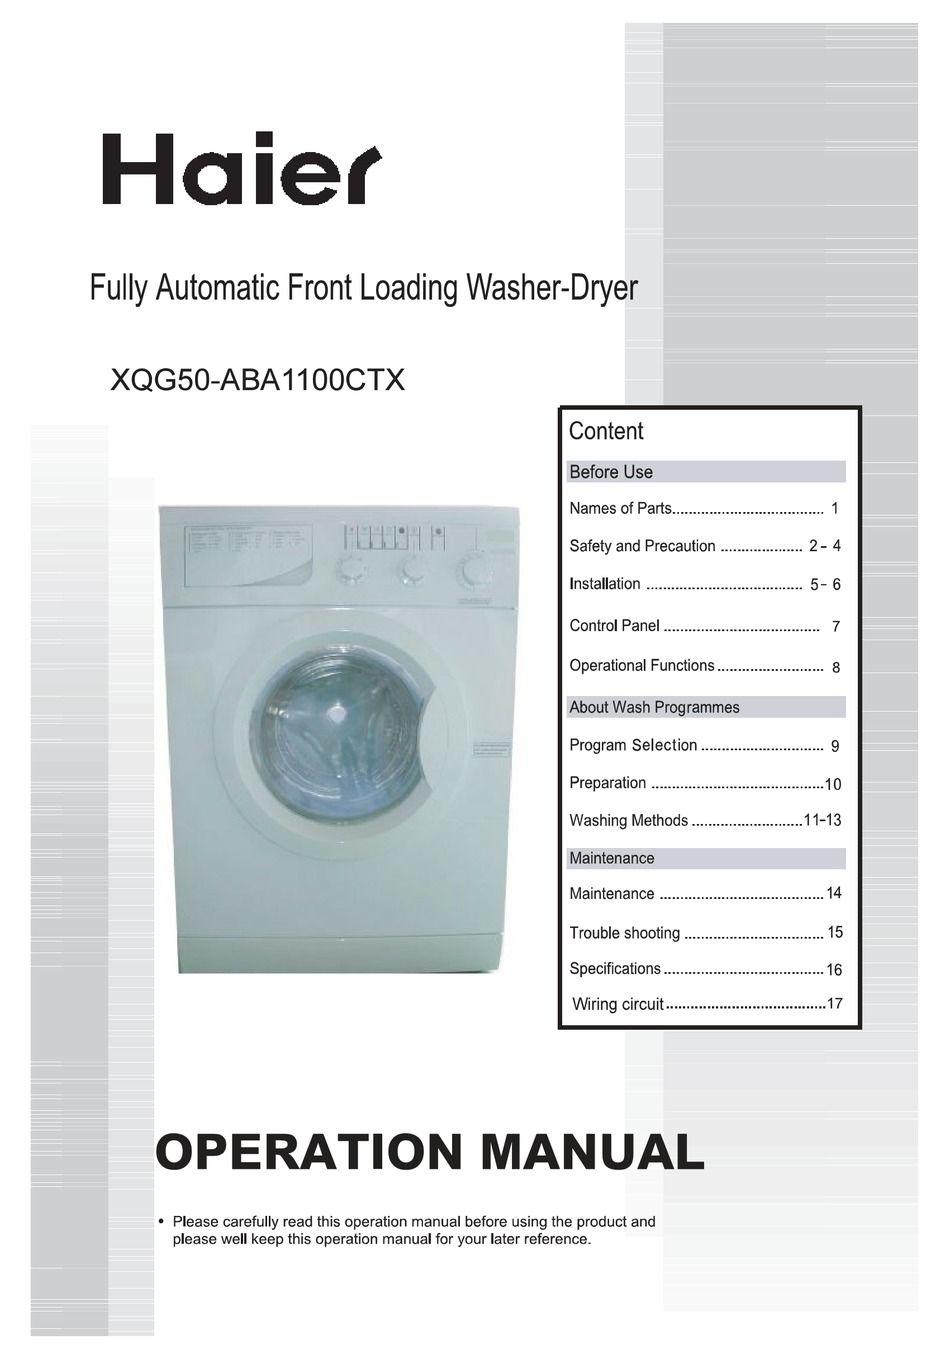 HAIER XQG50-AB1100CTX OPERATION MANUAL Pdf Download | ManualsLib